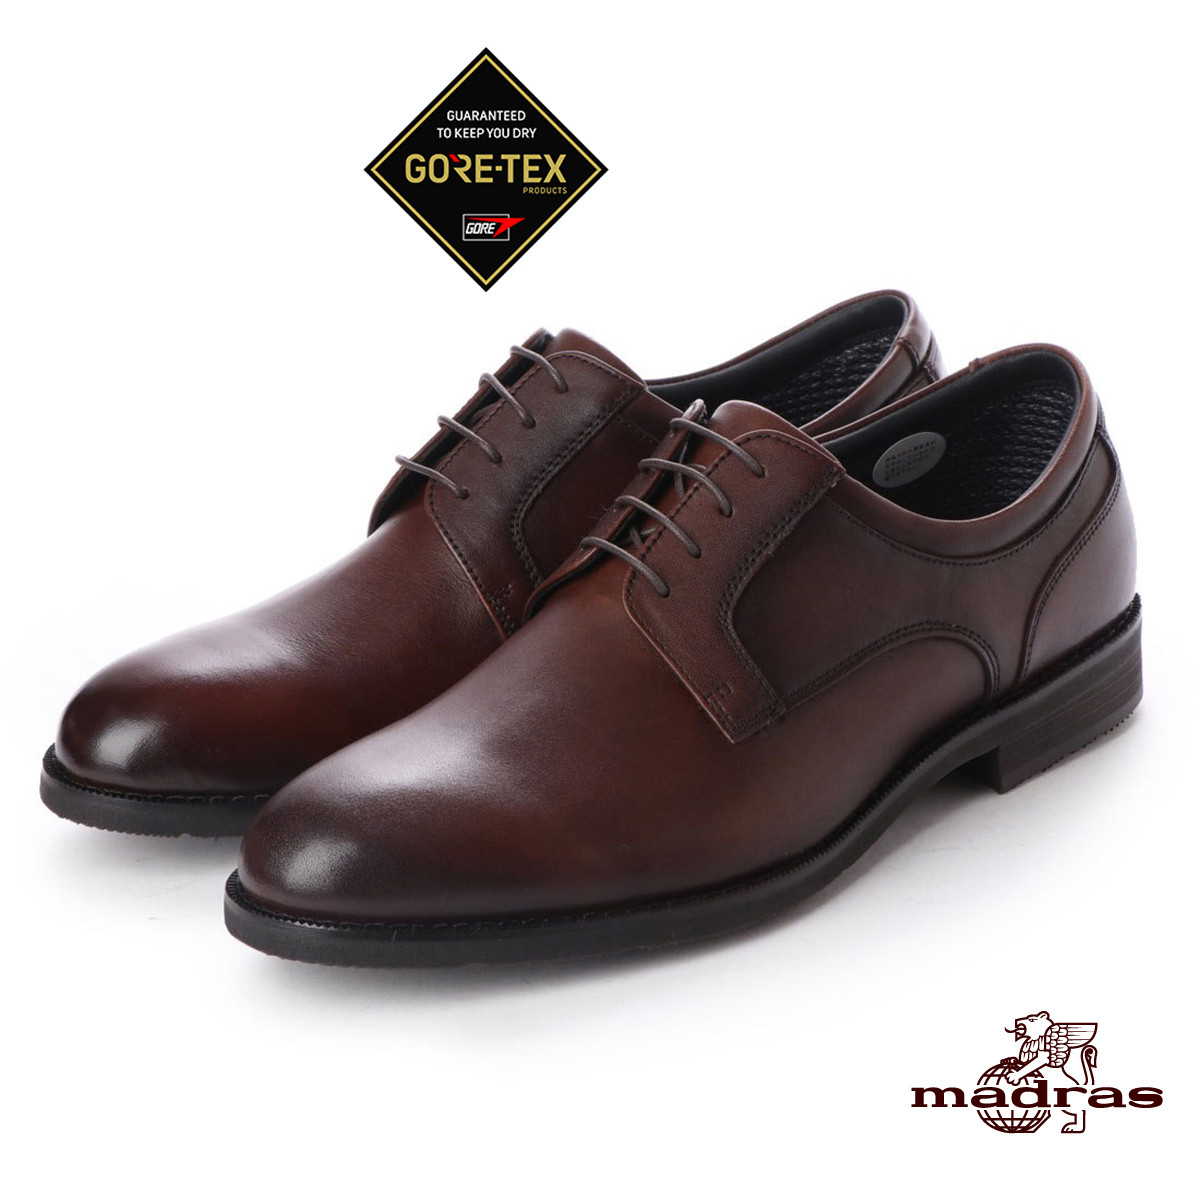 
madras Walk(マドラスウォーク)紳士靴 MW5906 ダークブラウン 25.5cm【1343241】
